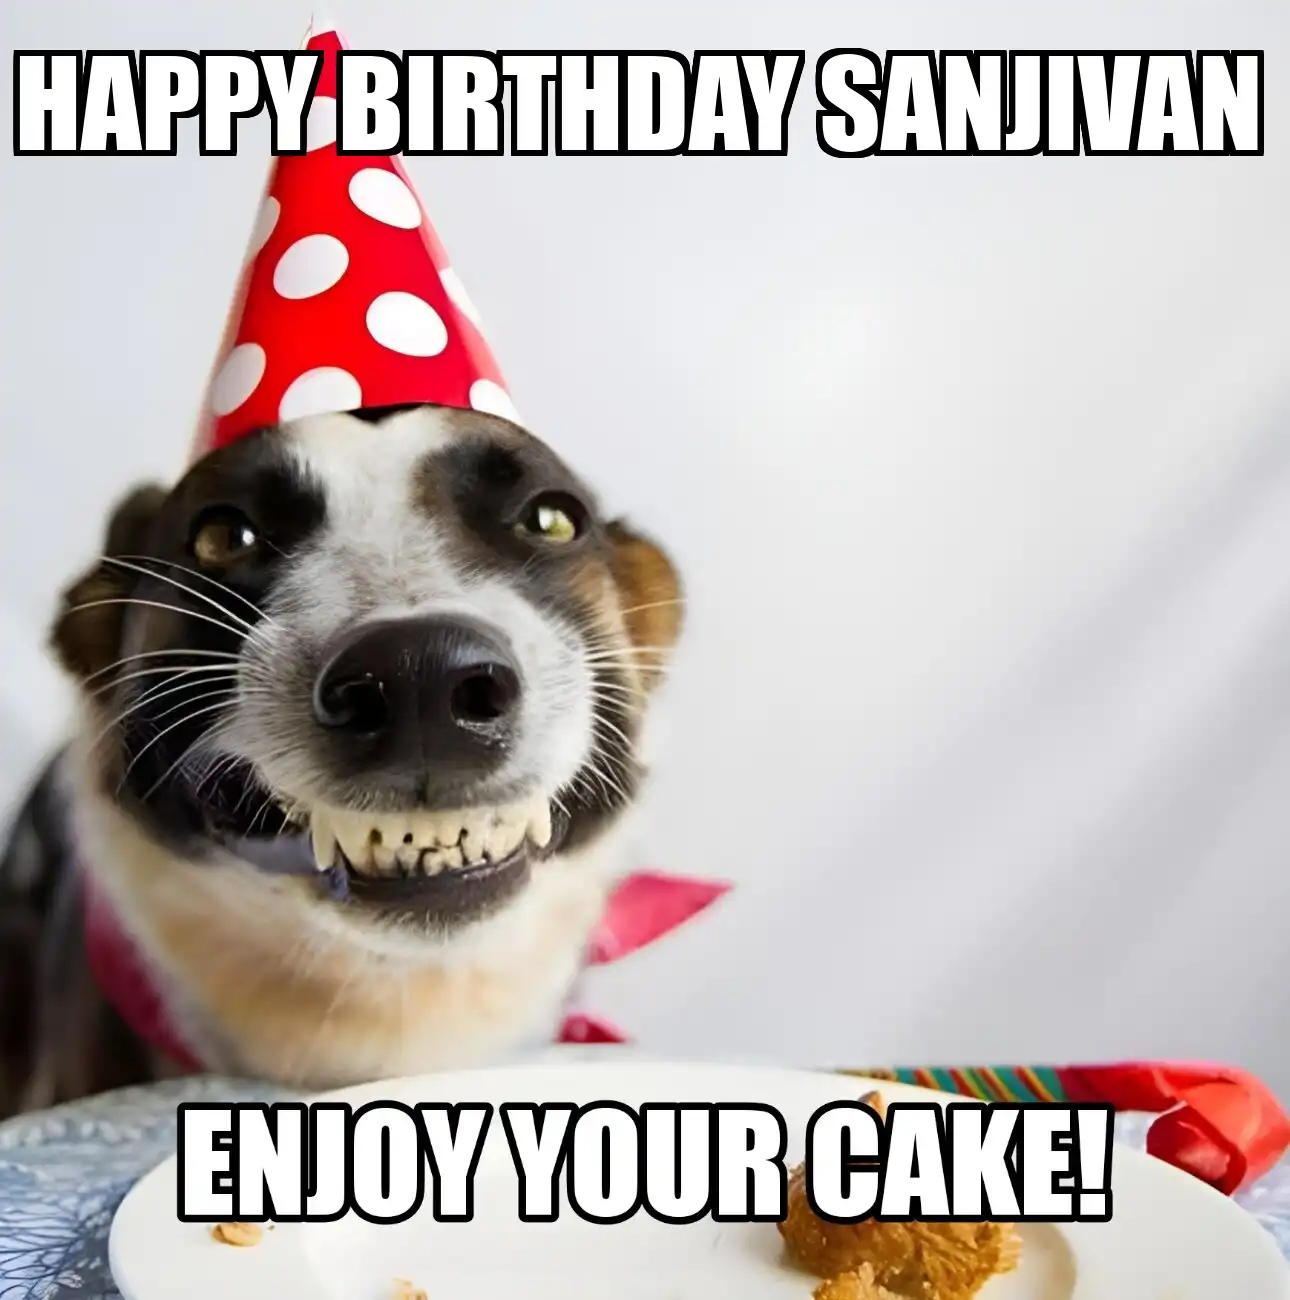 Happy Birthday Sanjivan Enjoy Your Cake Dog Meme